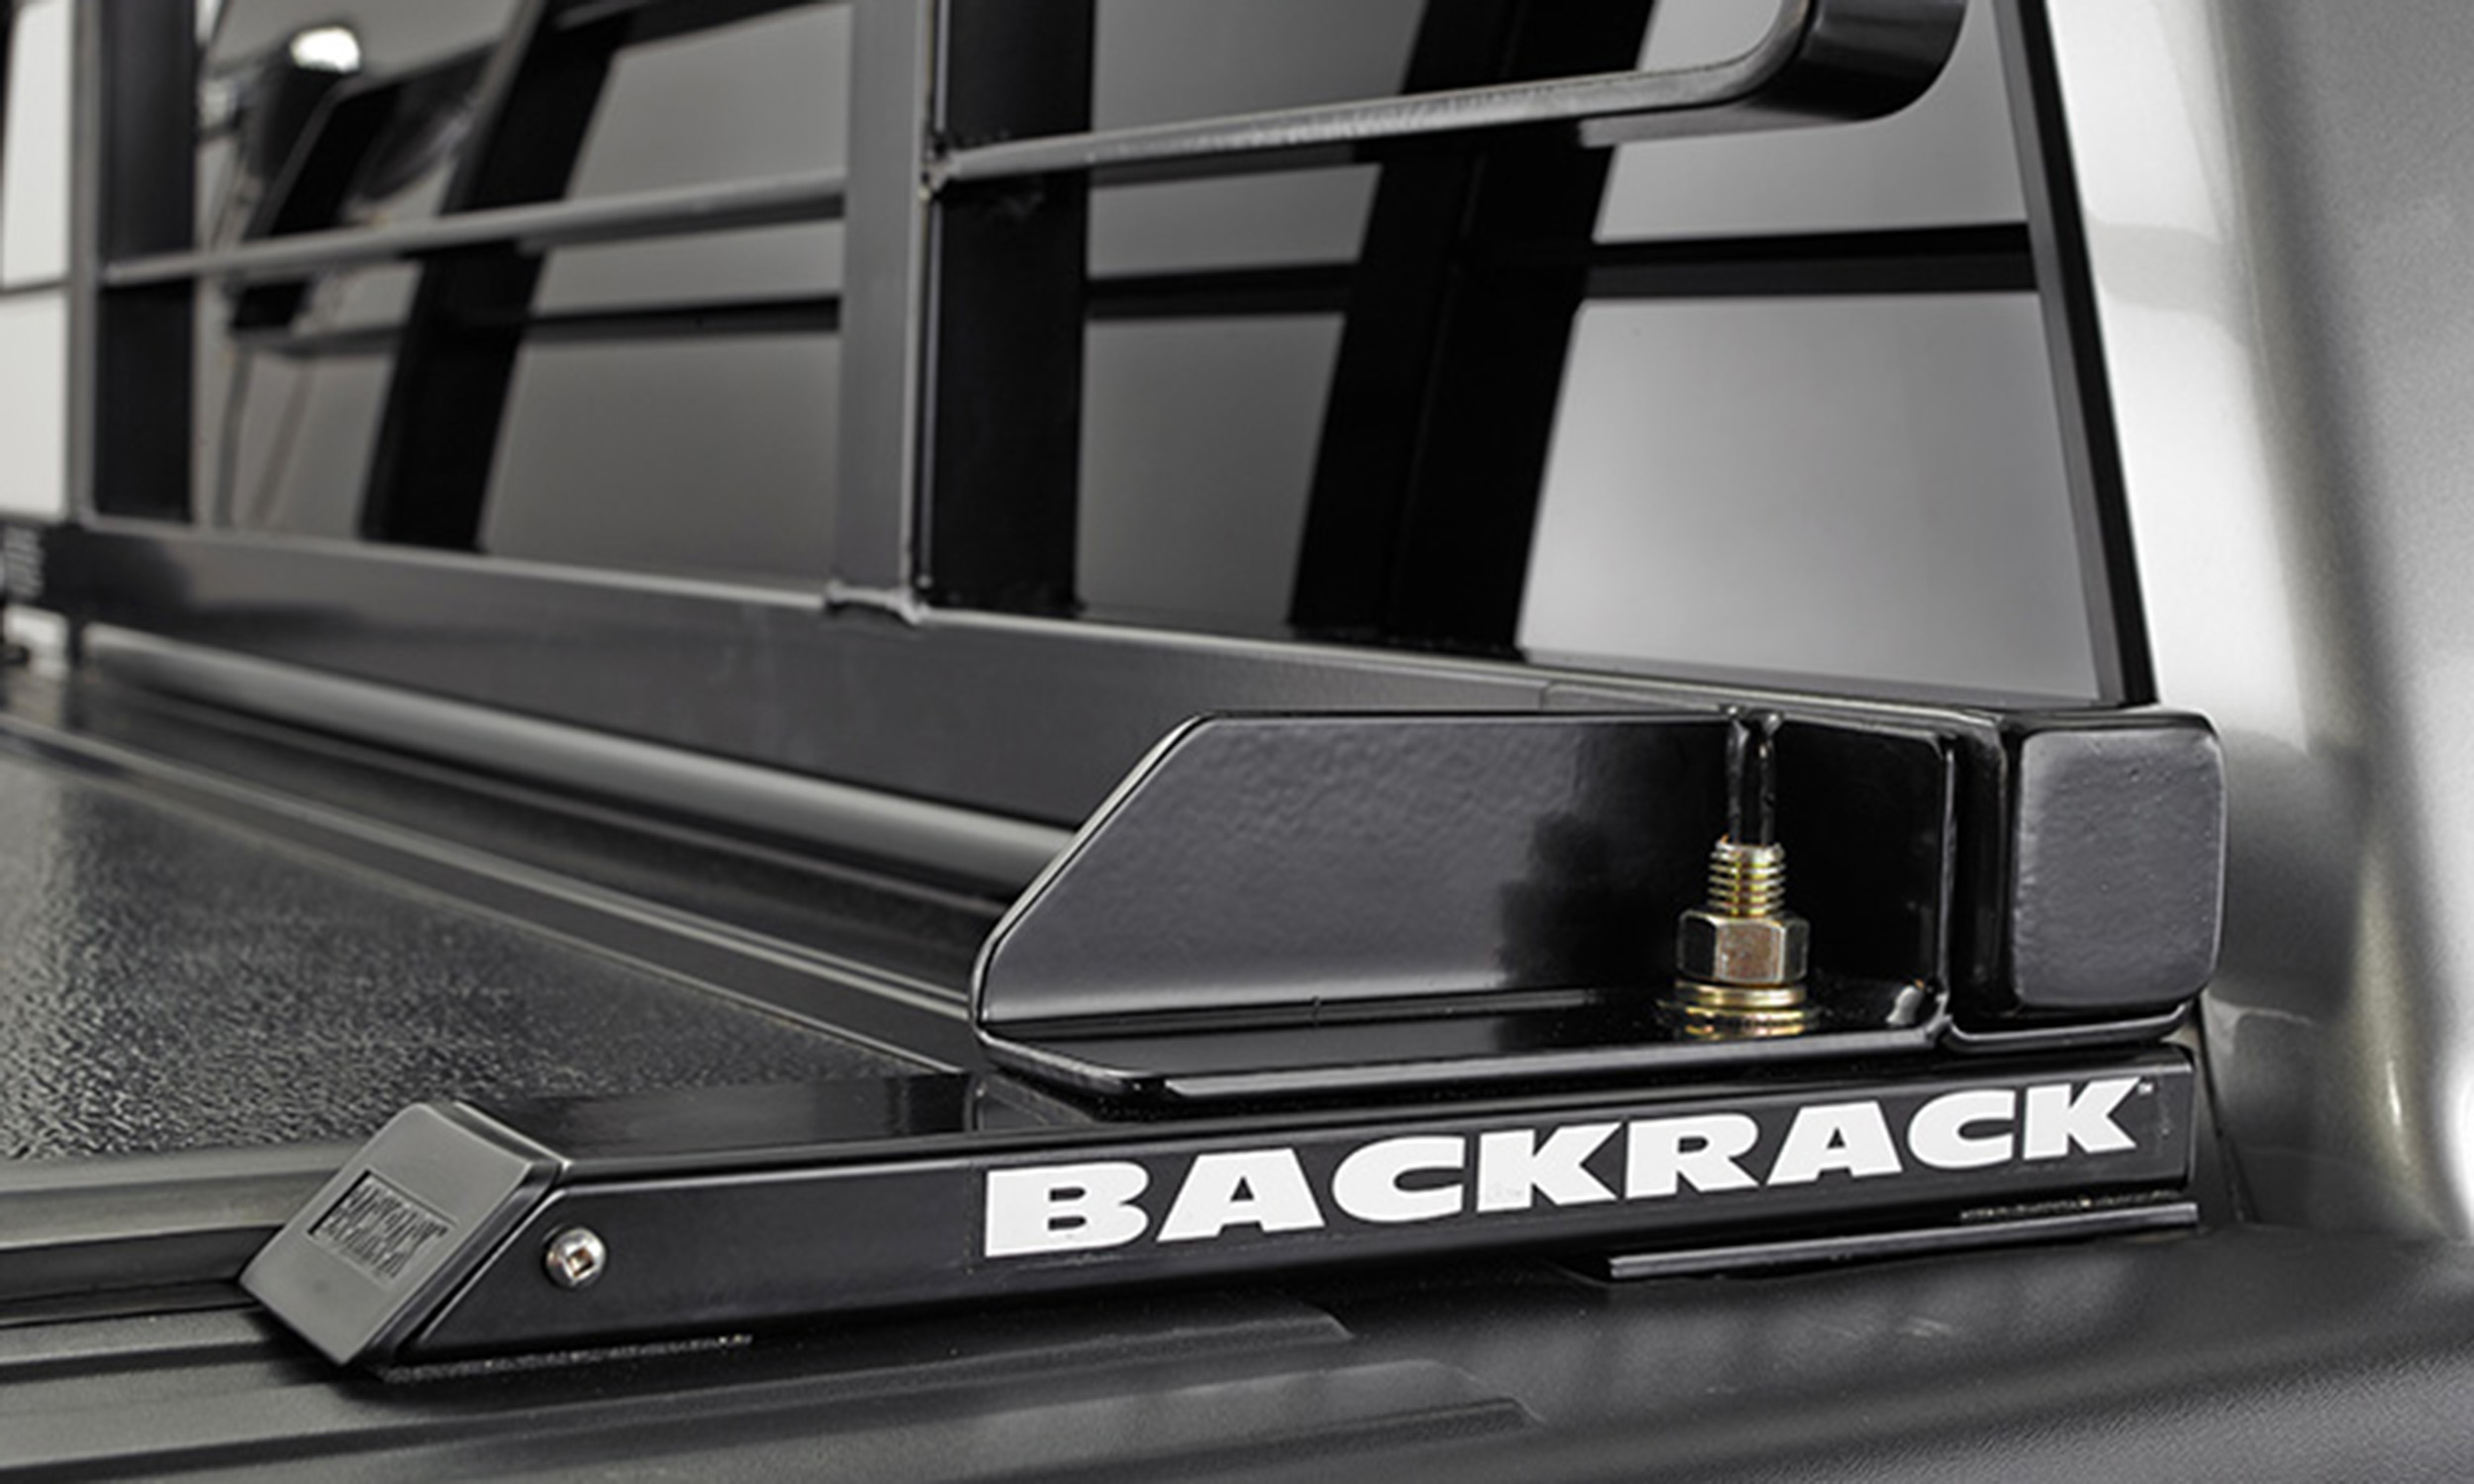 Backrack 40109 Truck Cab Protector / Headache Rack Installation Kit